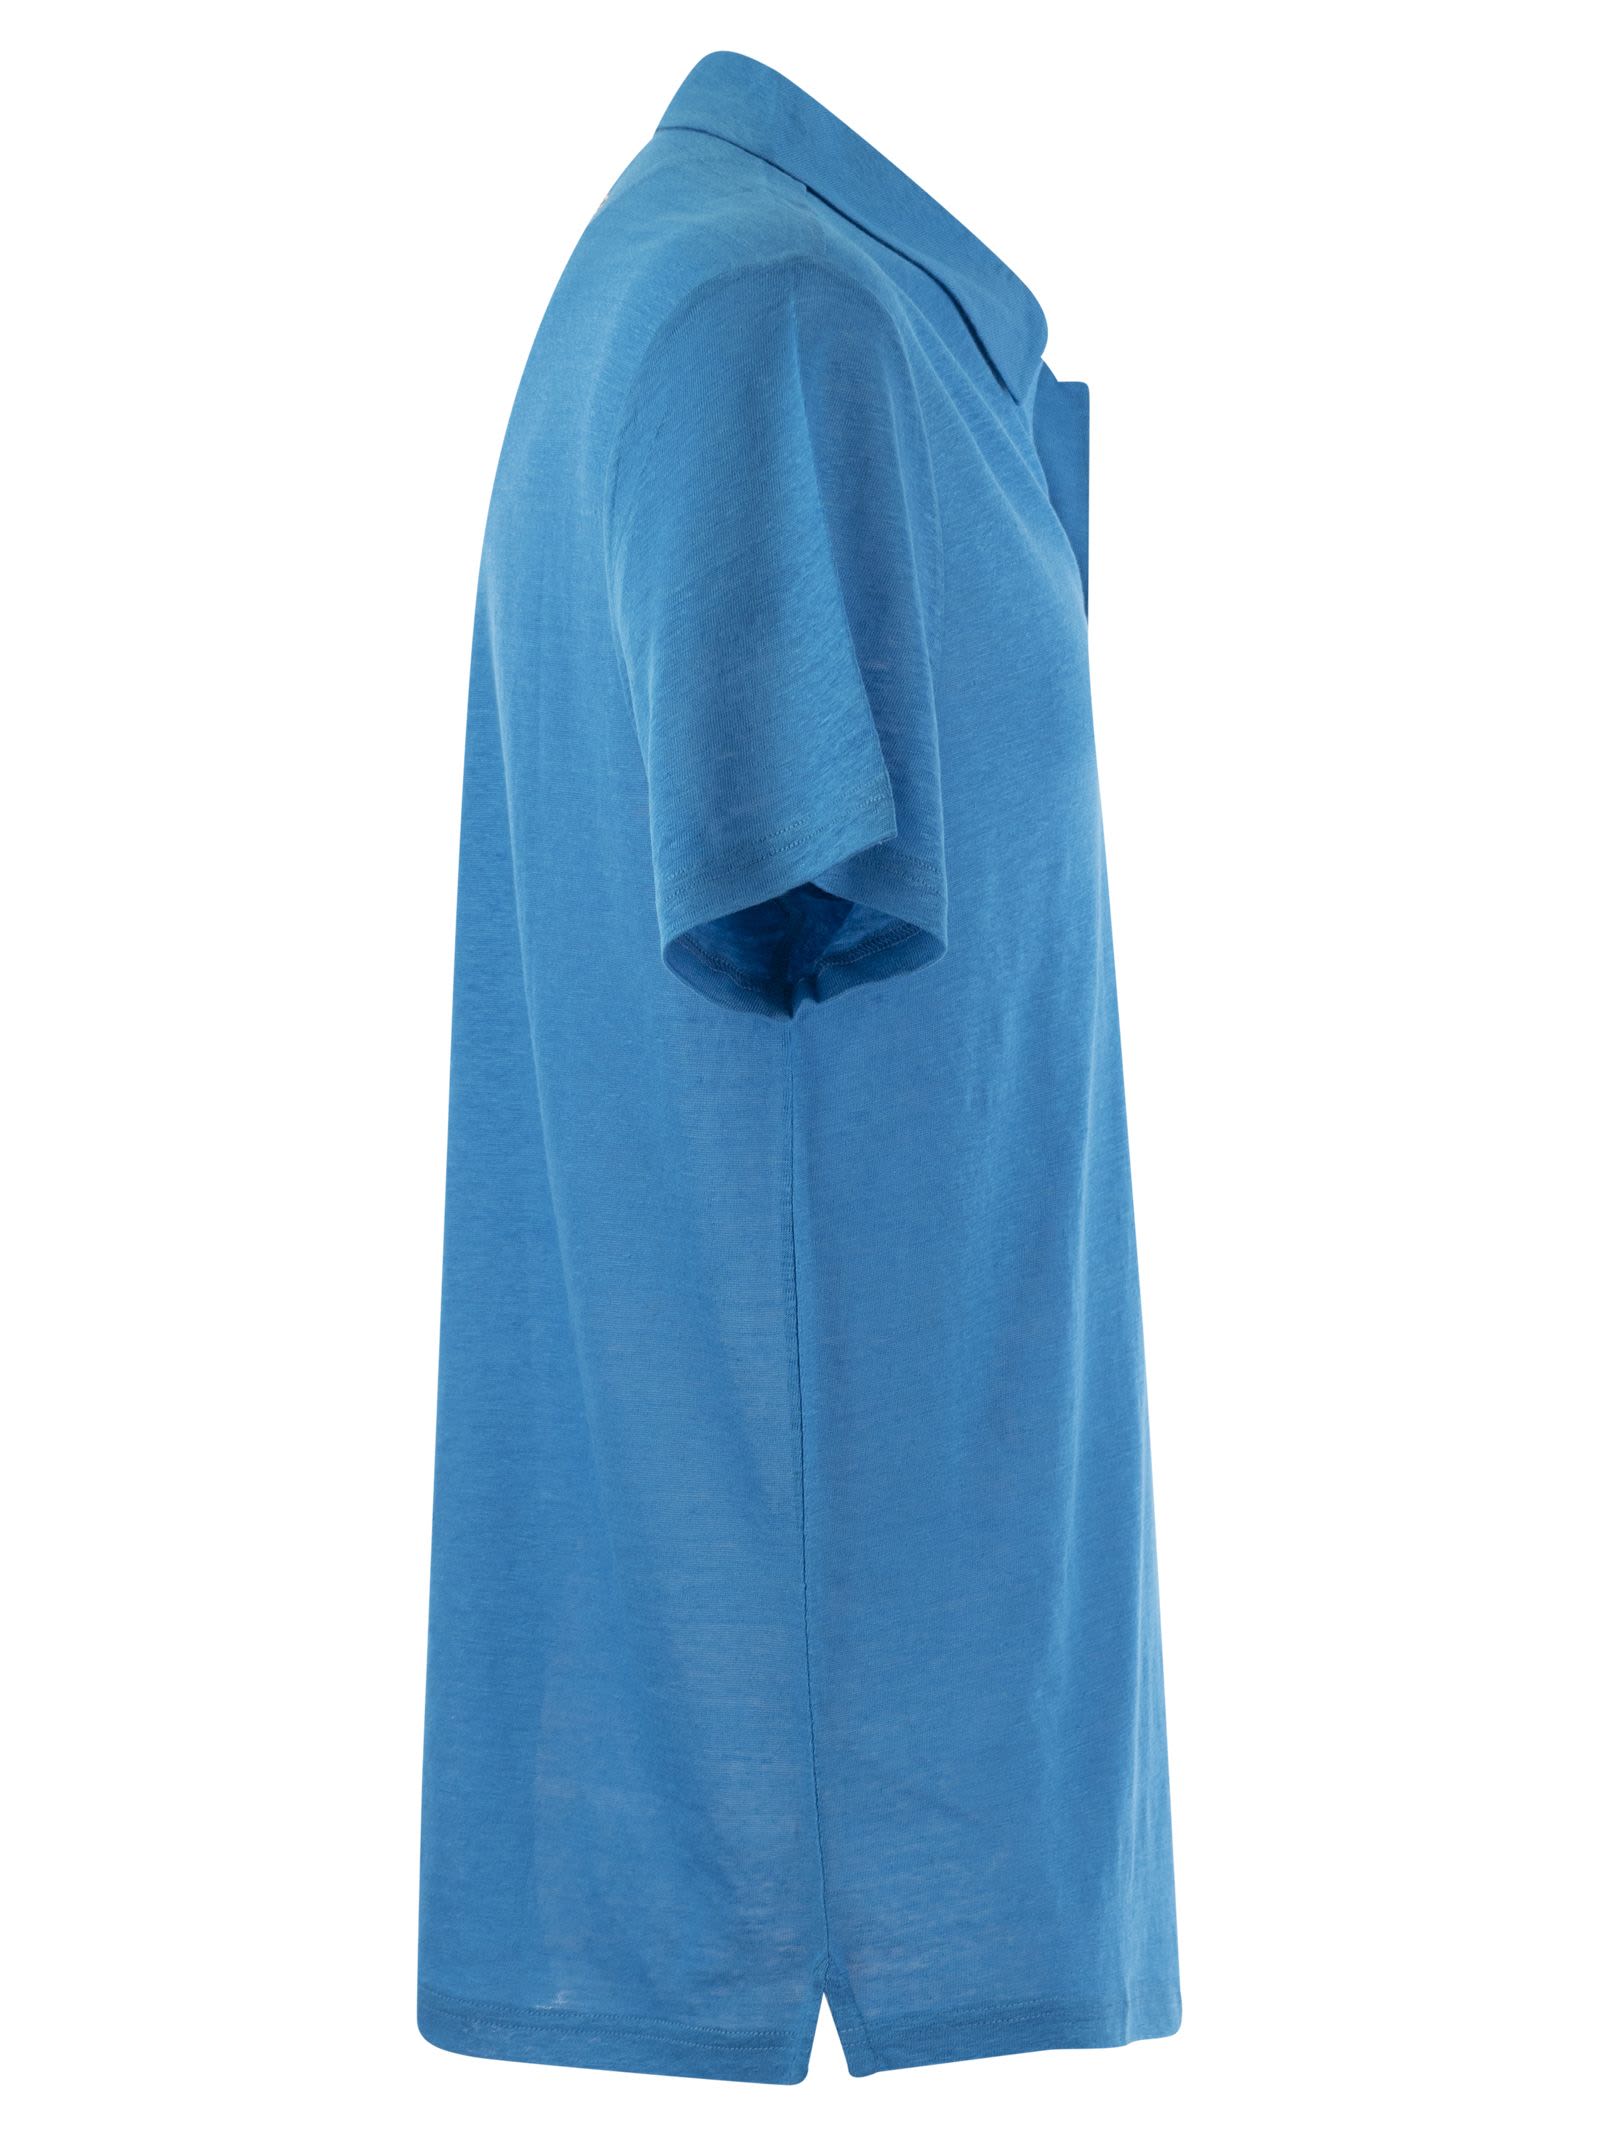 Shop Vilebrequin Short-sleeved Linen Polo Shirt In Light Blue